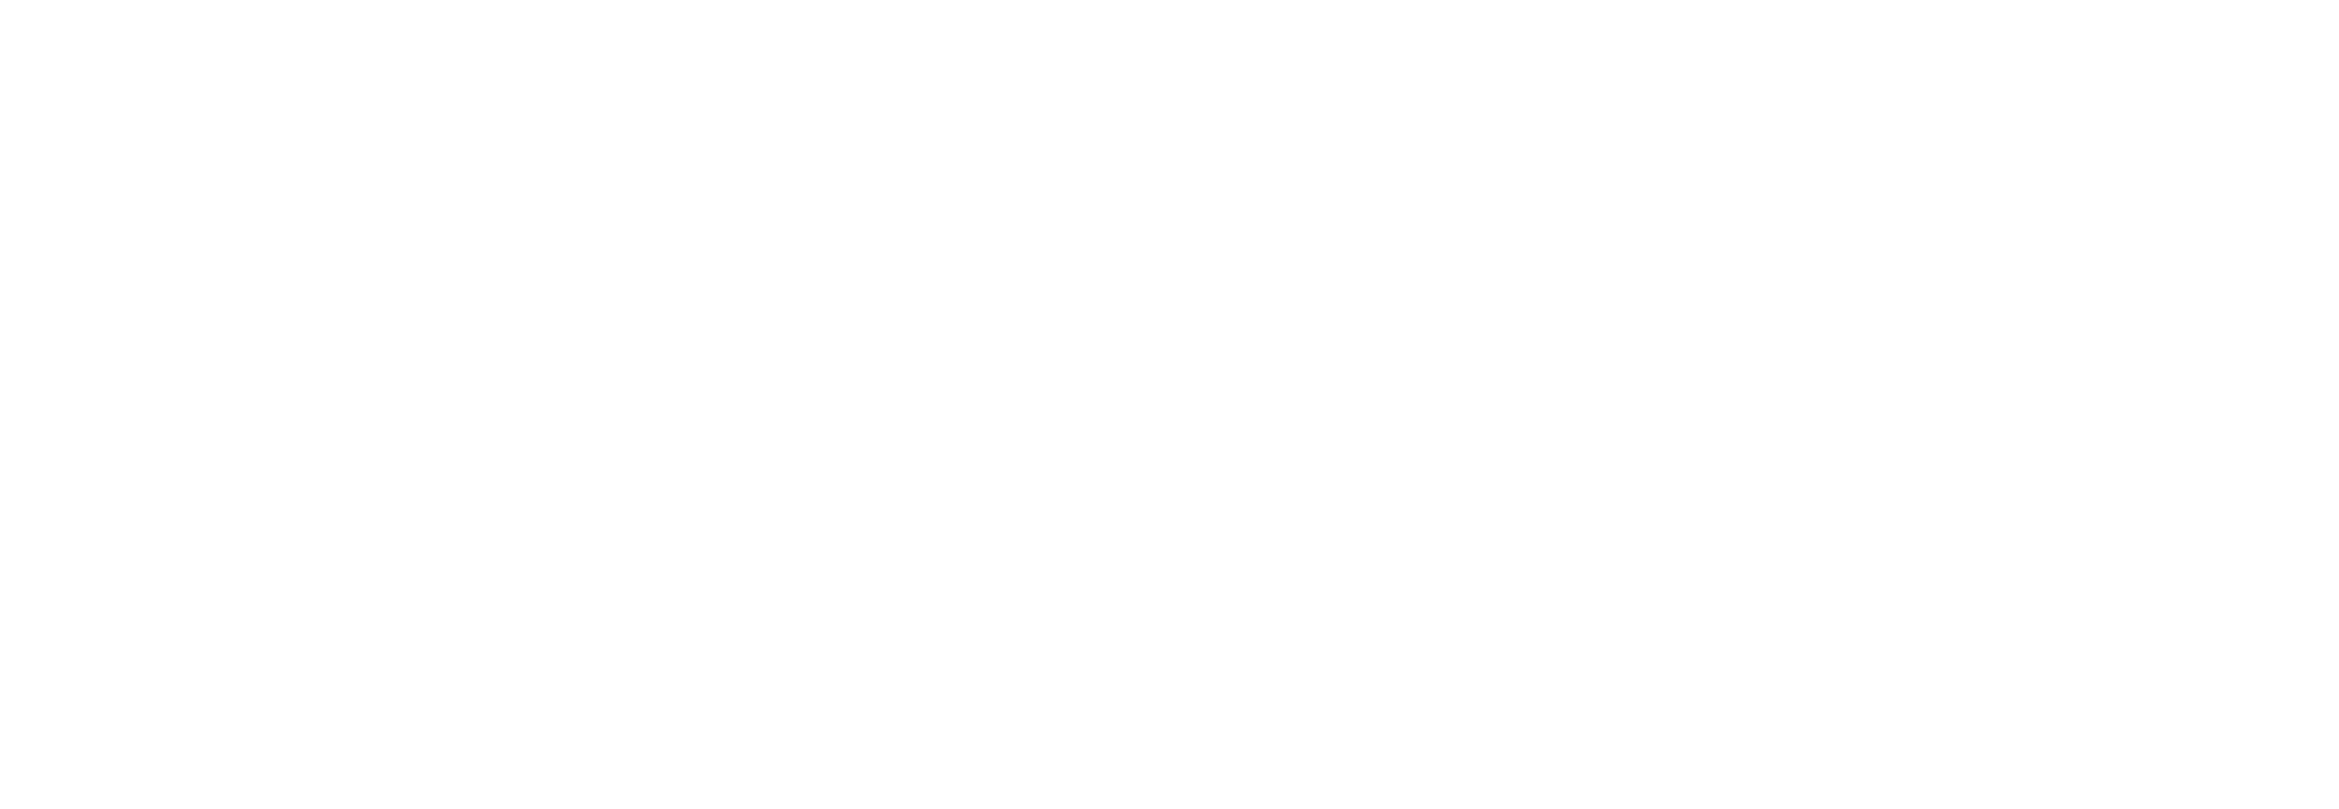 Mamma Bear Home Care